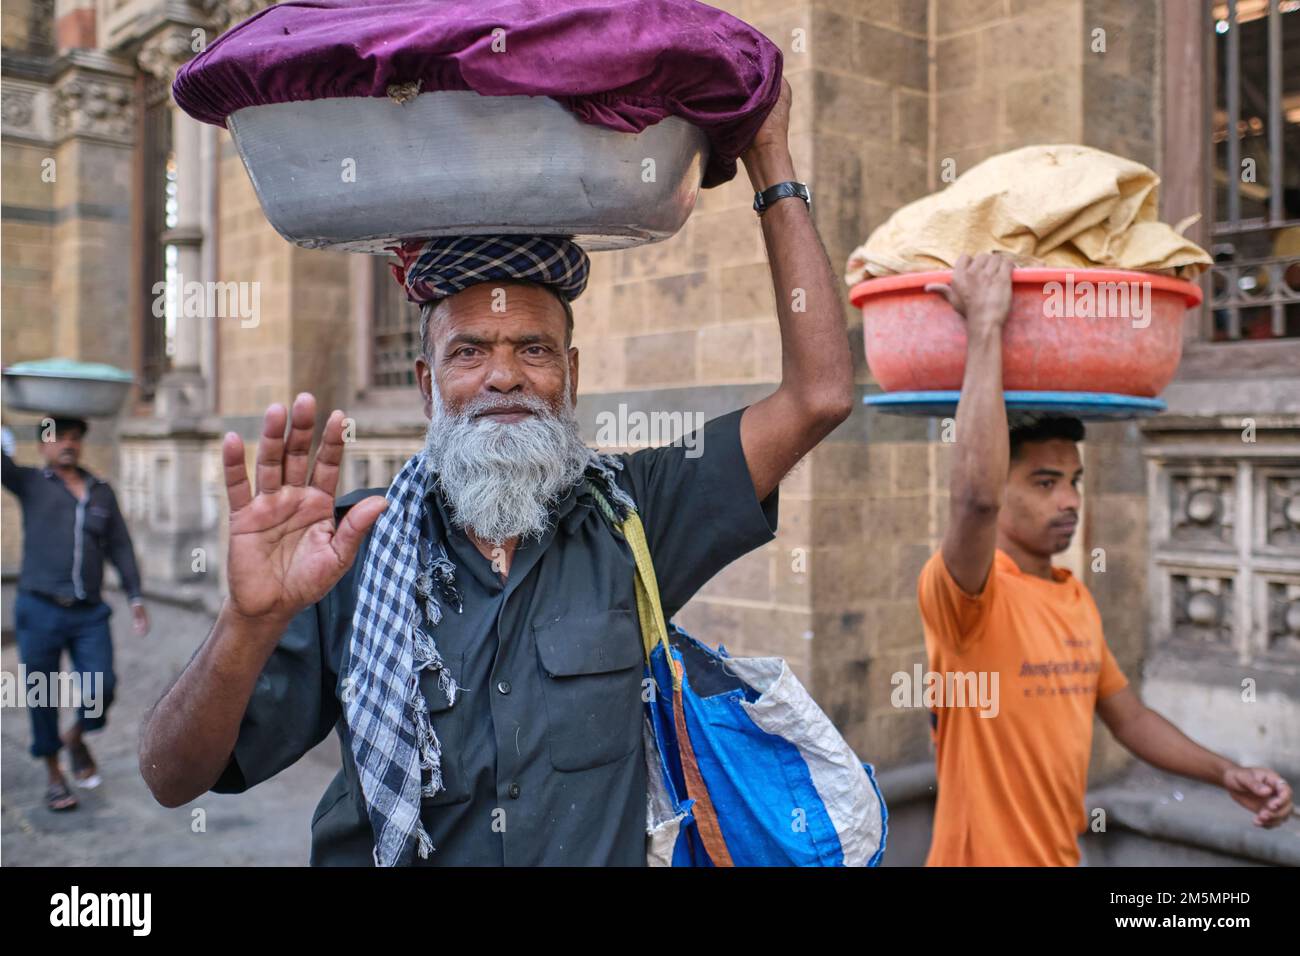 A porter with a tray of fish on his head, at Chhatrapati Shivaji Maharaj Terminus (CMST), in Mumbai, India, stopping to greet the photographer Stock Photo